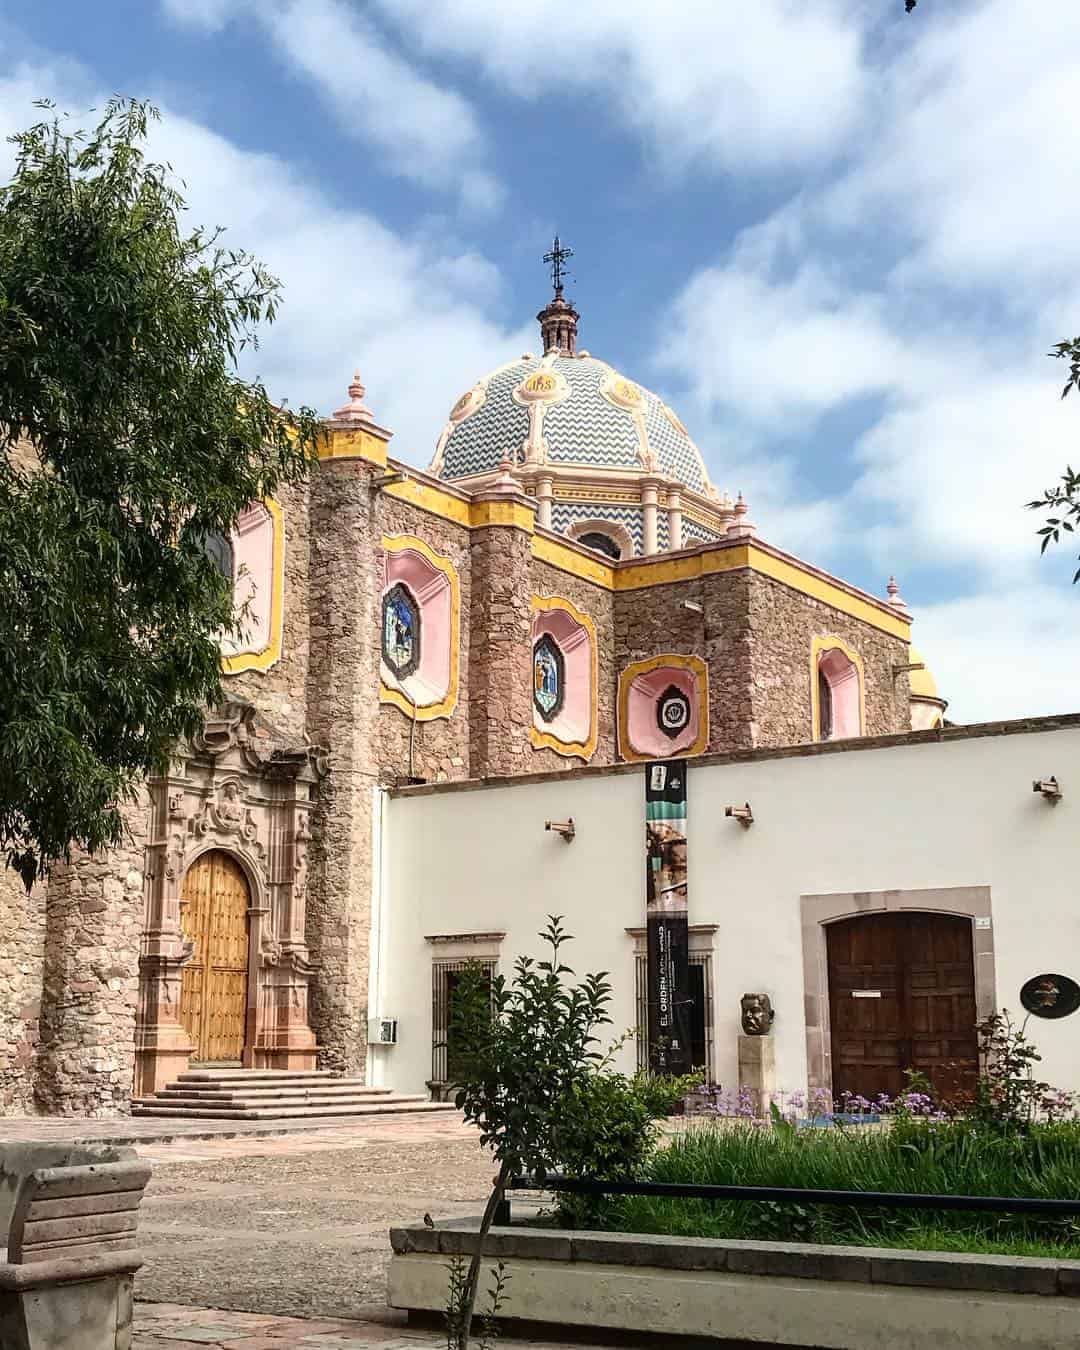 Instagram-ponch77-Museo-Jose-Guadalupe-Posada-en-Aguascalientes